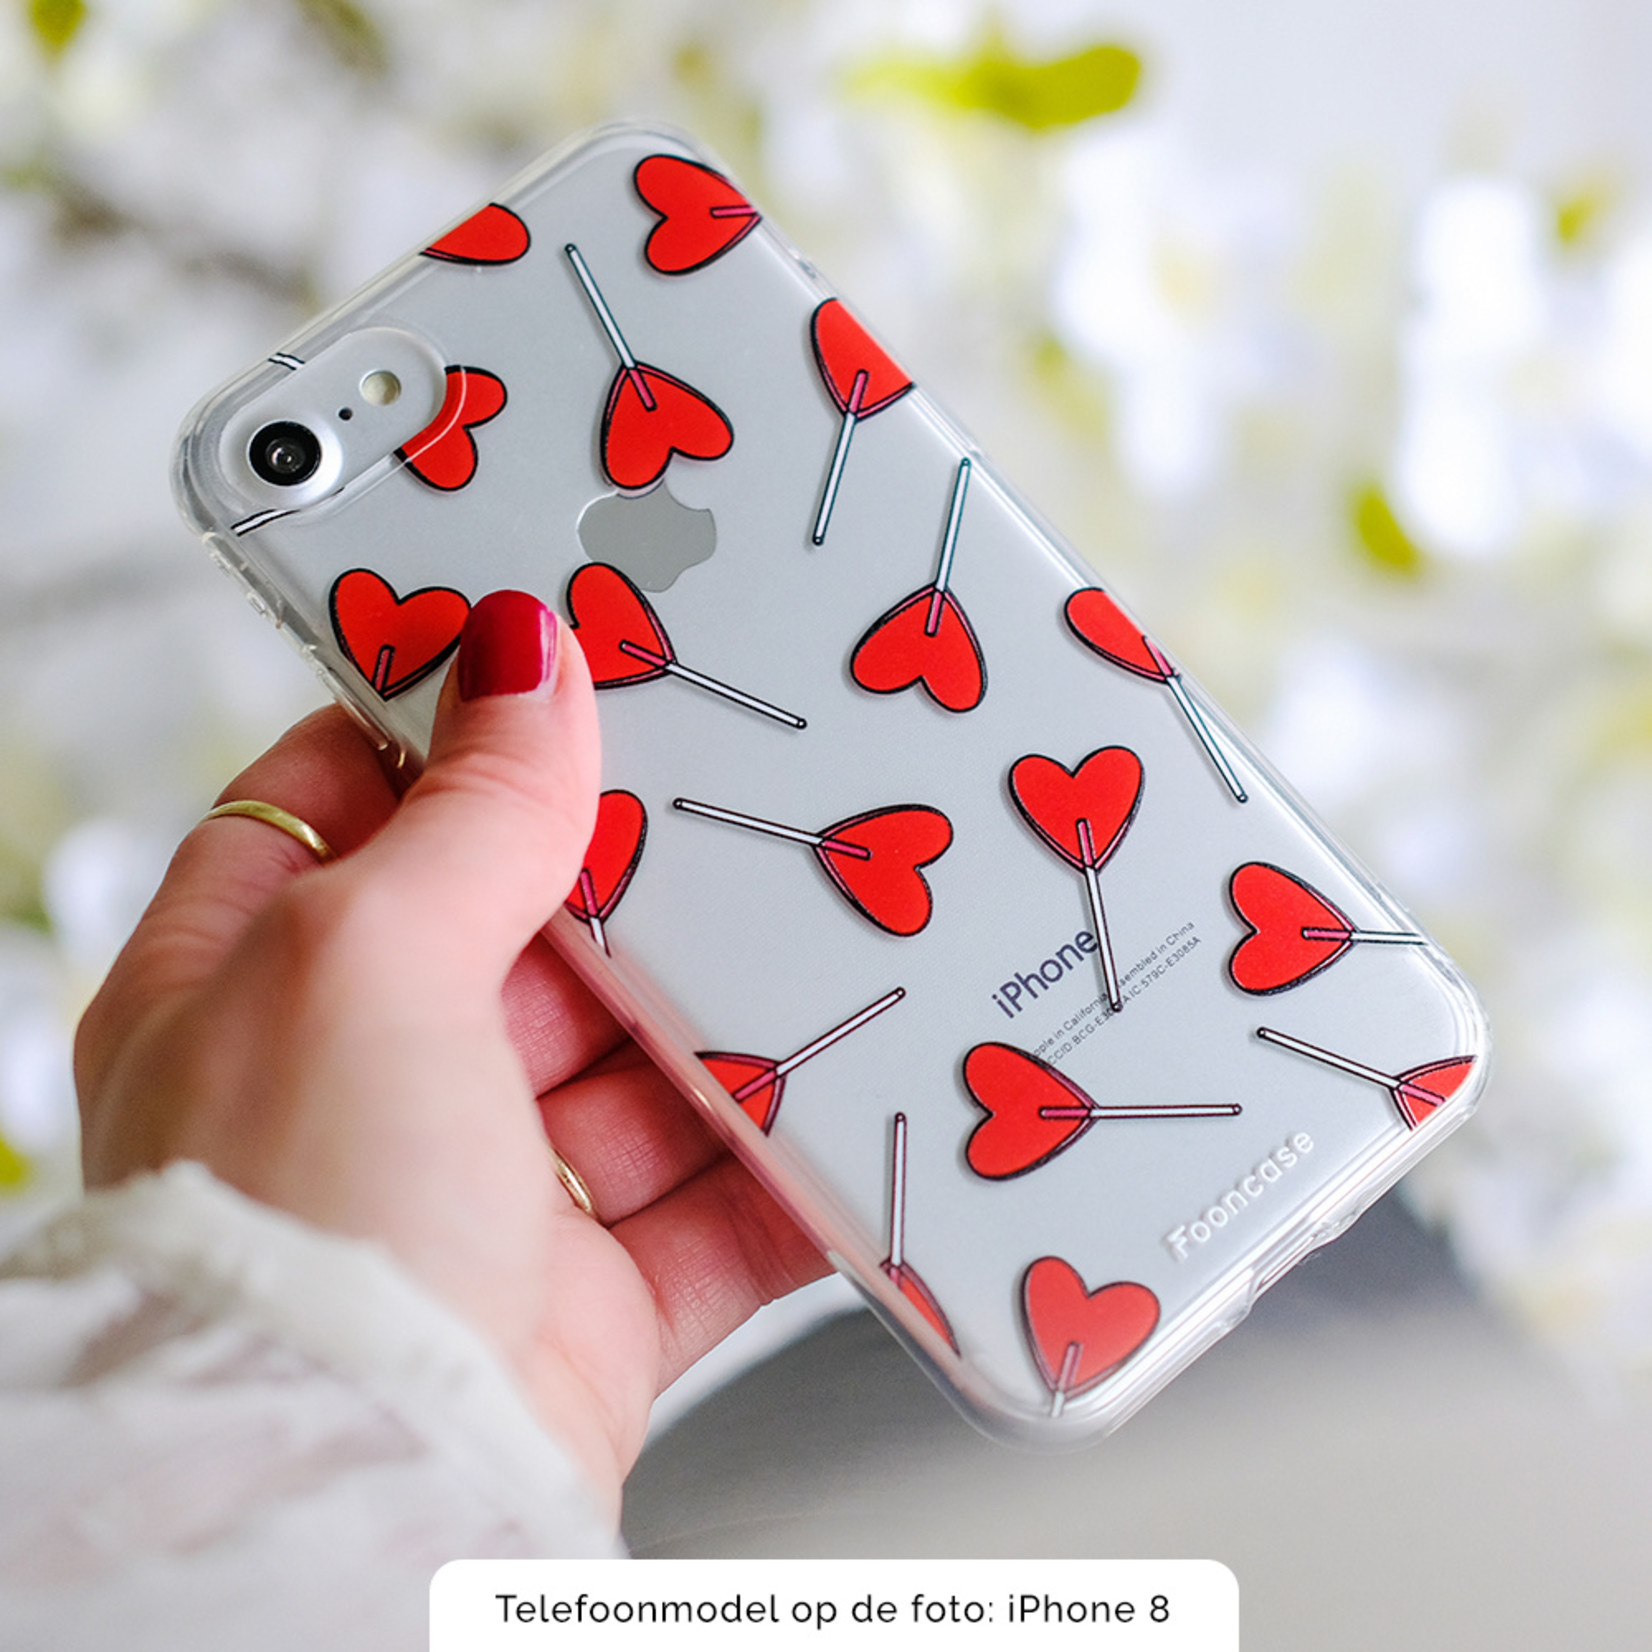 FOONCASE Iphone 12 Cover - Love Pop